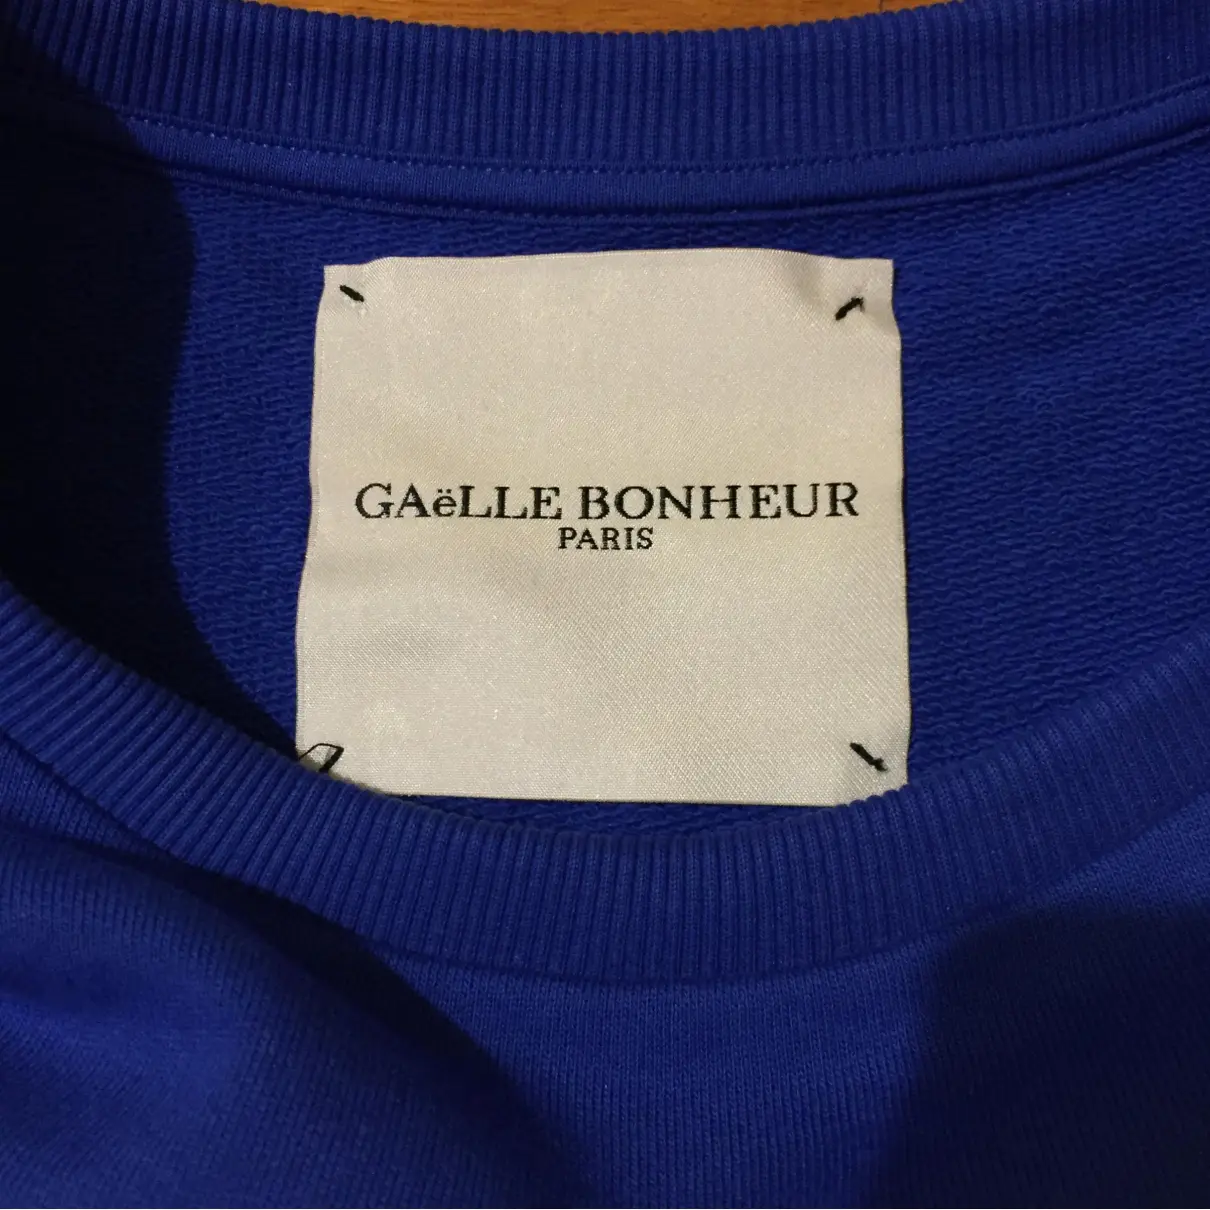 Buy Gaelle Bonheur Sweatshirt online